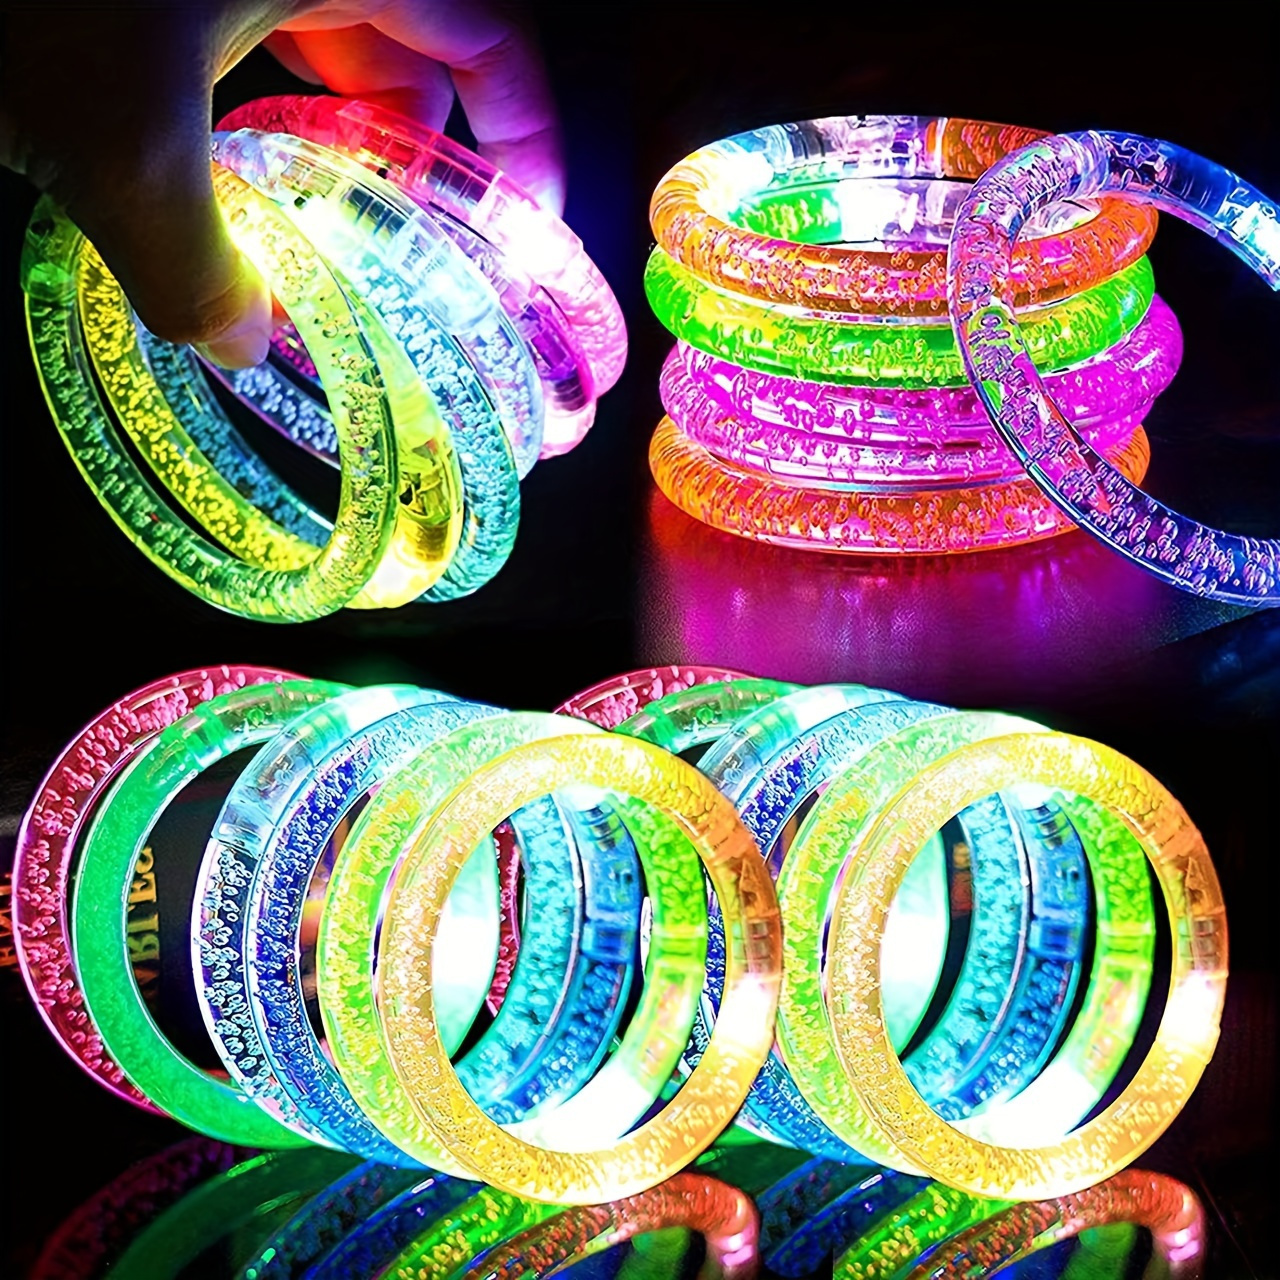 Light Up Bracelet Glow in The Dark Party Favors for Kids 24pk